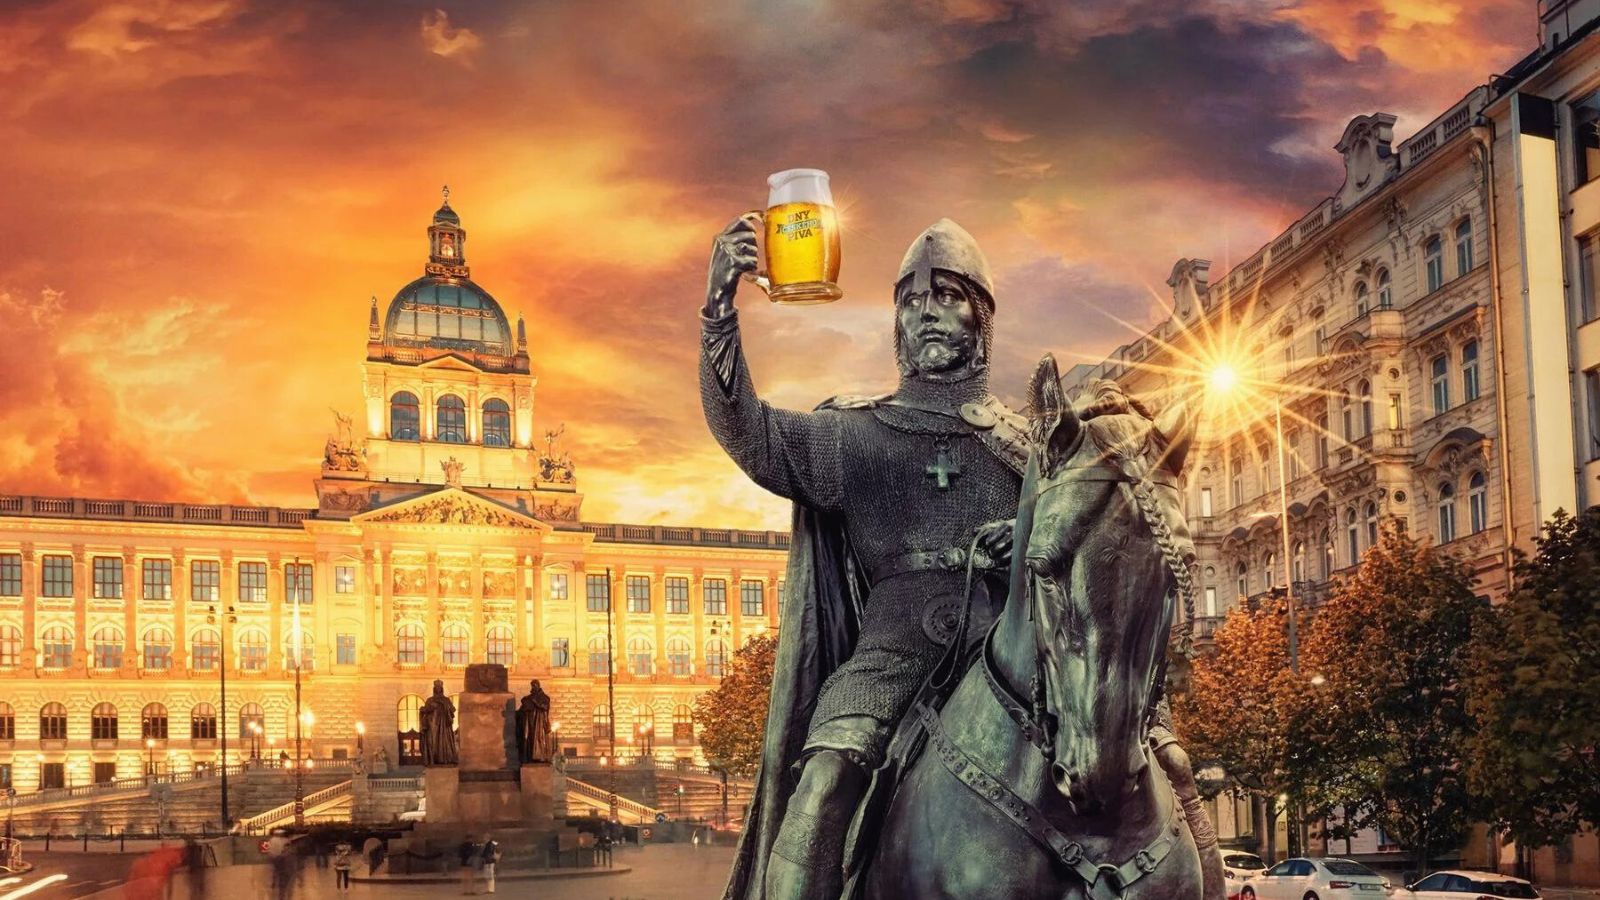 Festival Dva týdny oslavuje české pivo